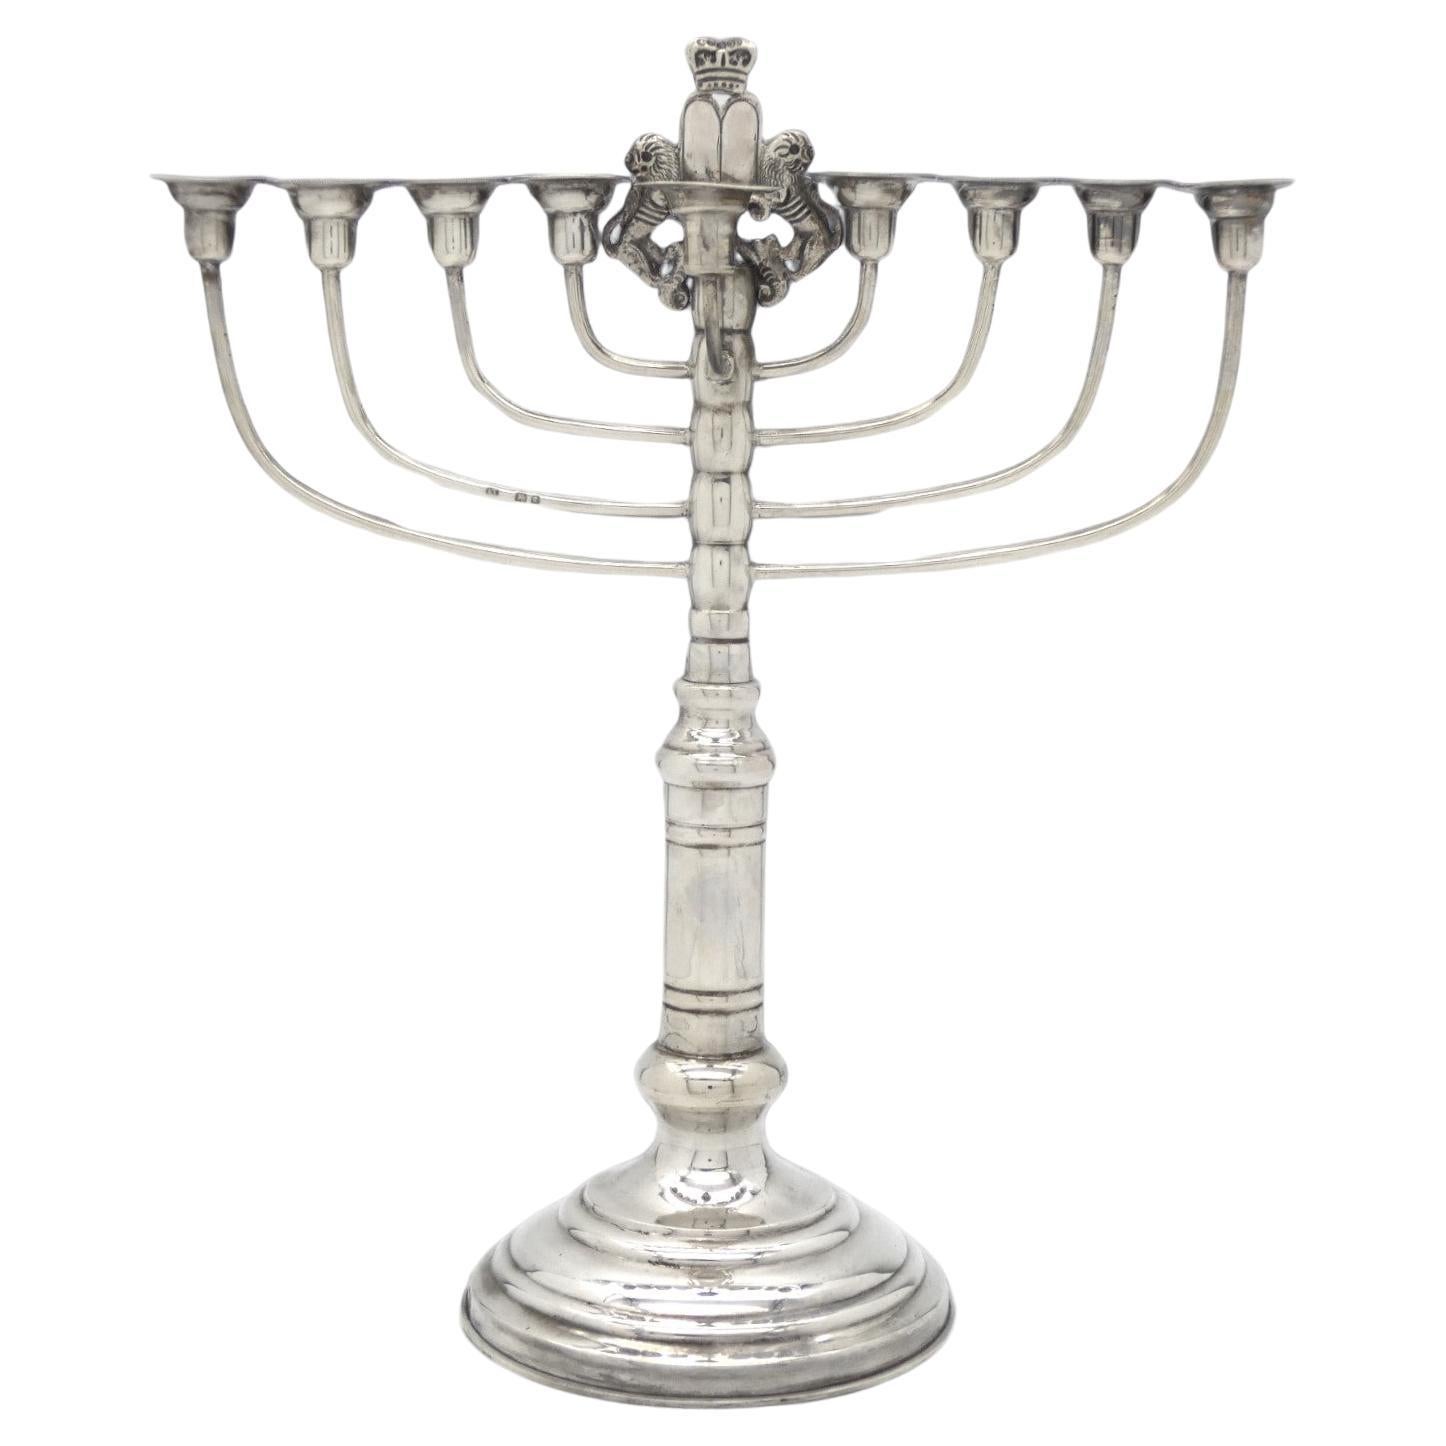 Early 20th Century English Silver Hanukkah Lamp